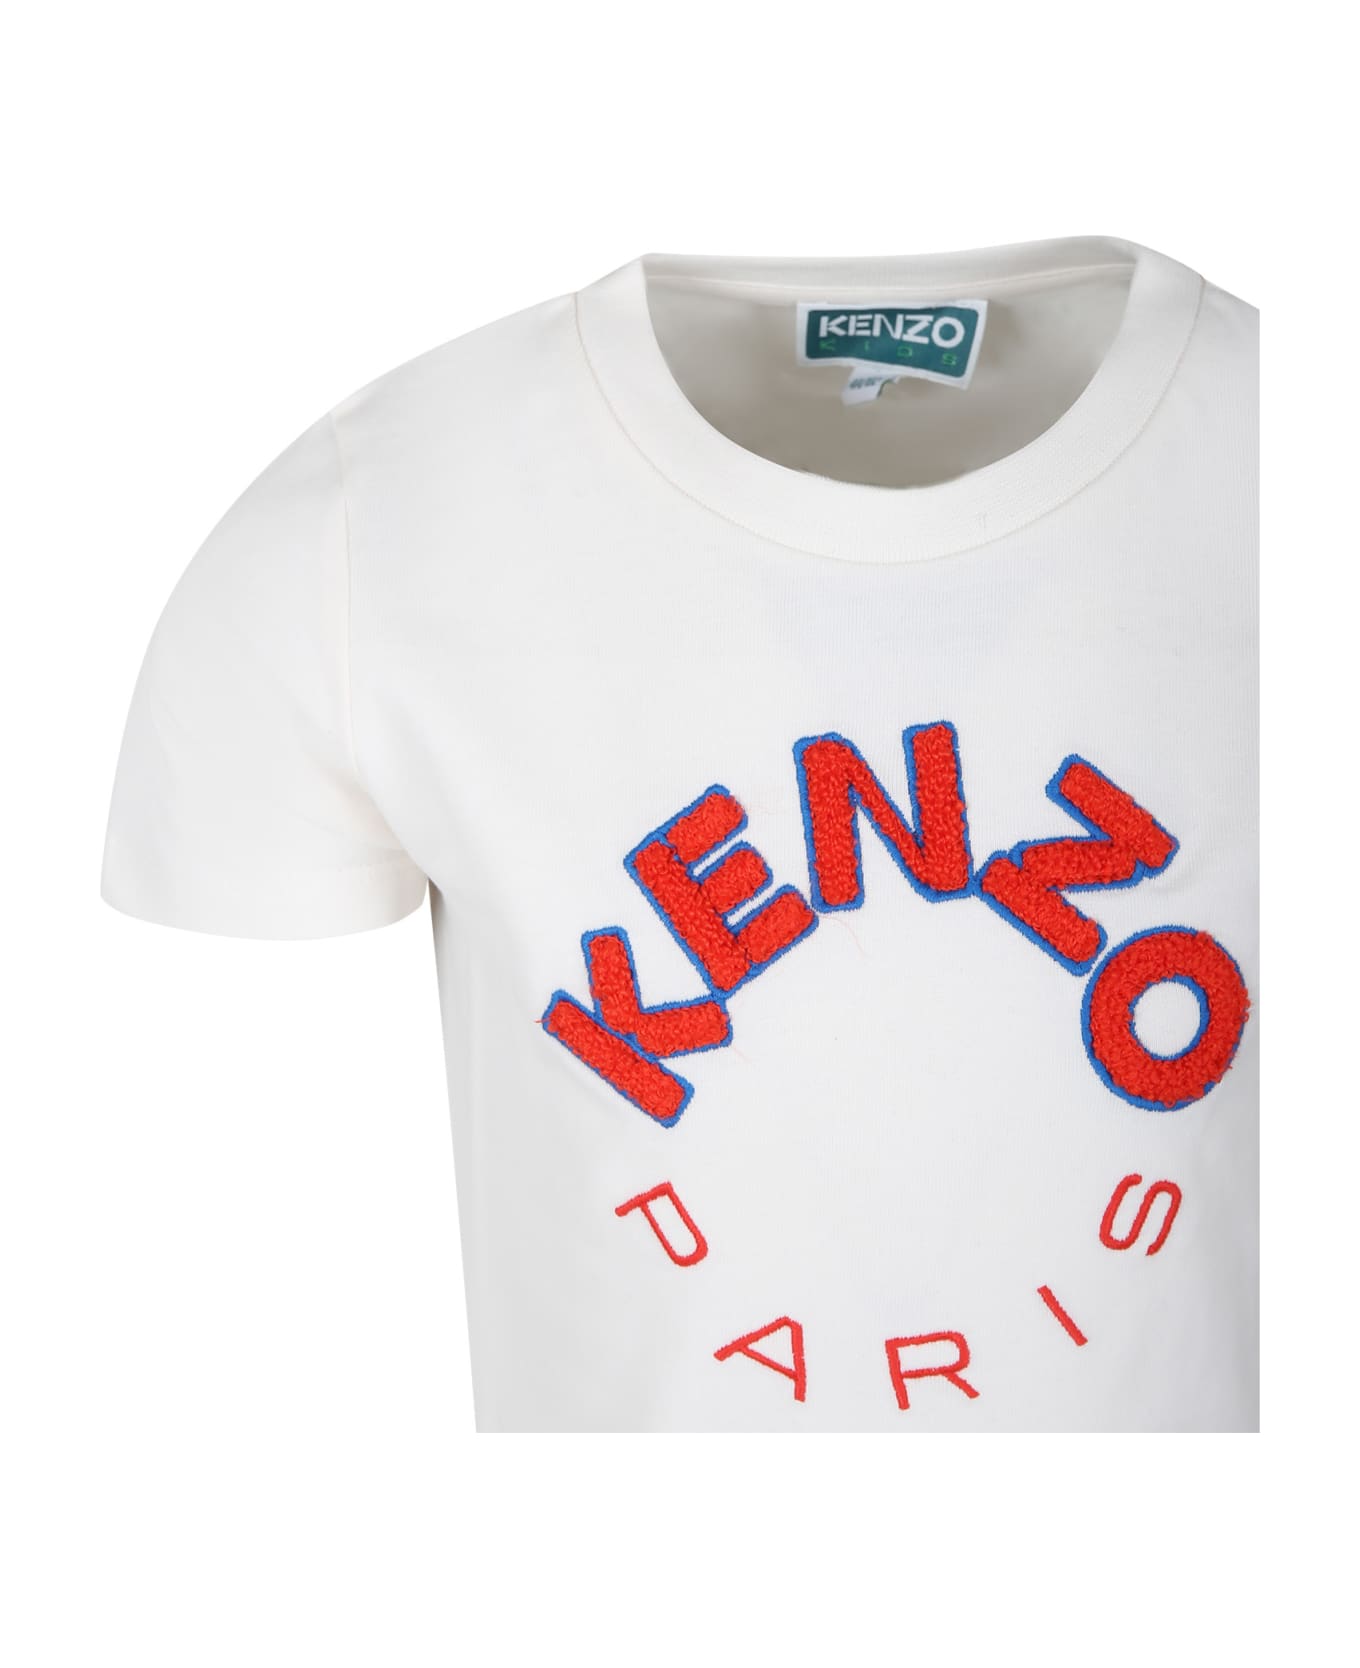 Kenzo Kids White T-shirt For Boy With Logo - White